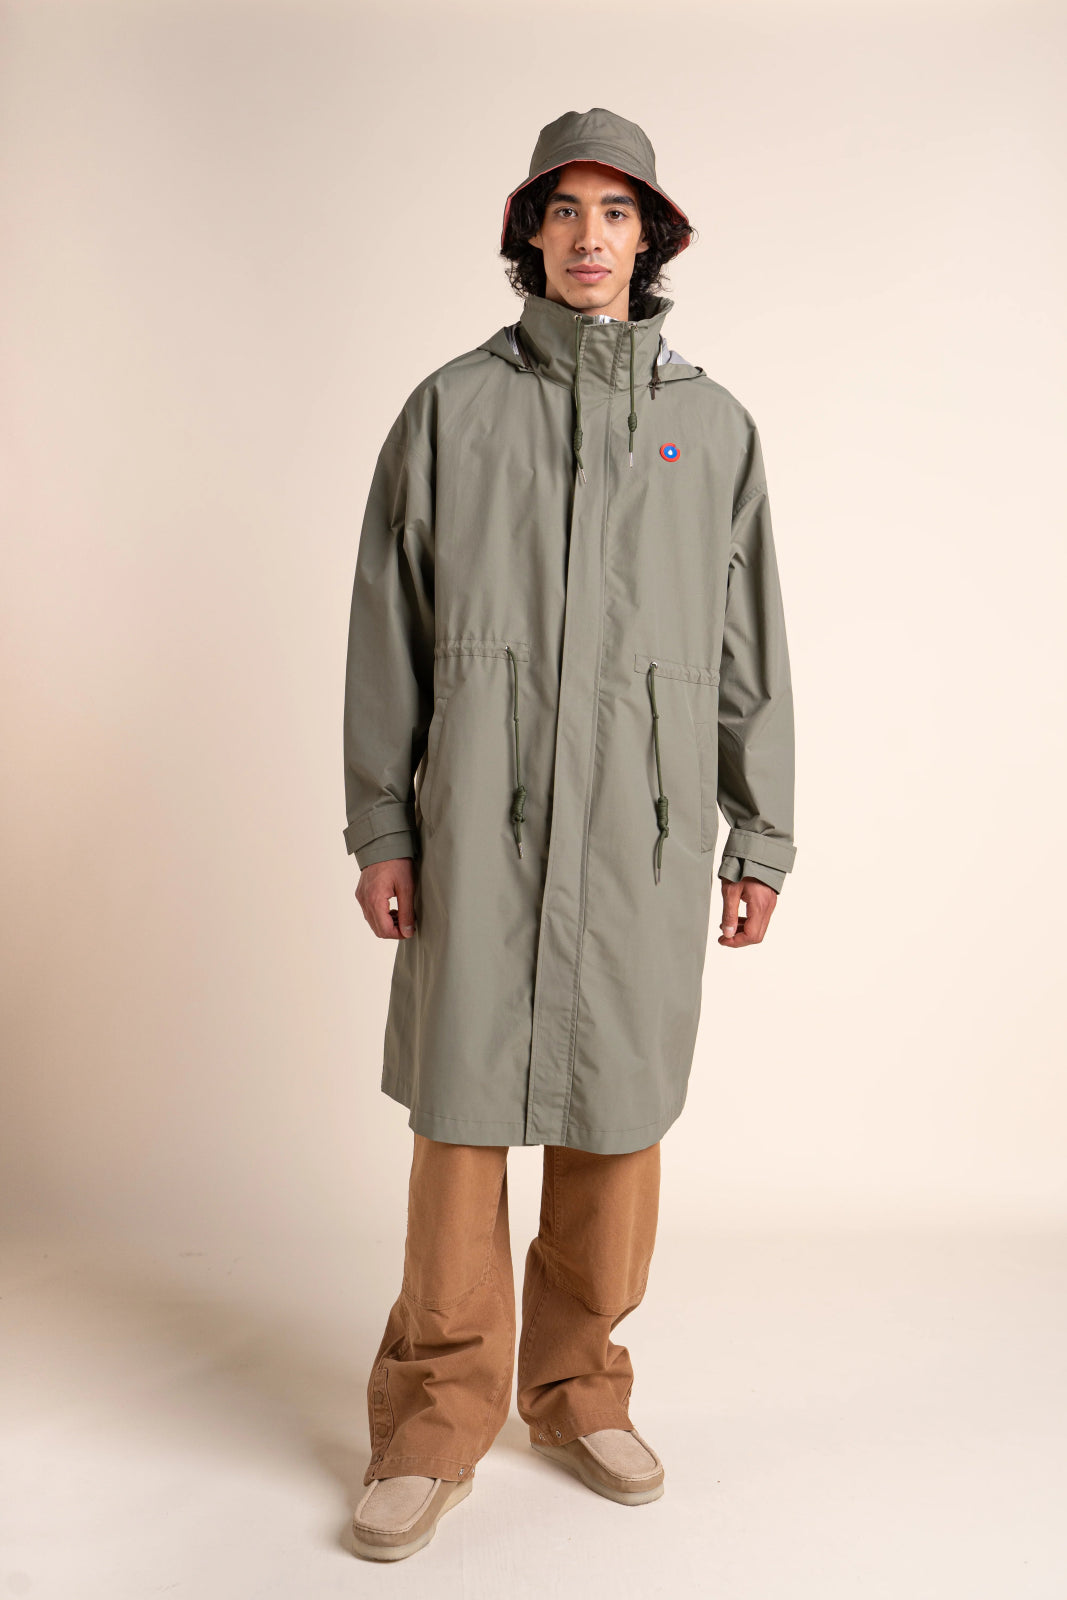 Caumartin - Long oversize waterproof jacket- Flotte #couleur_kaki